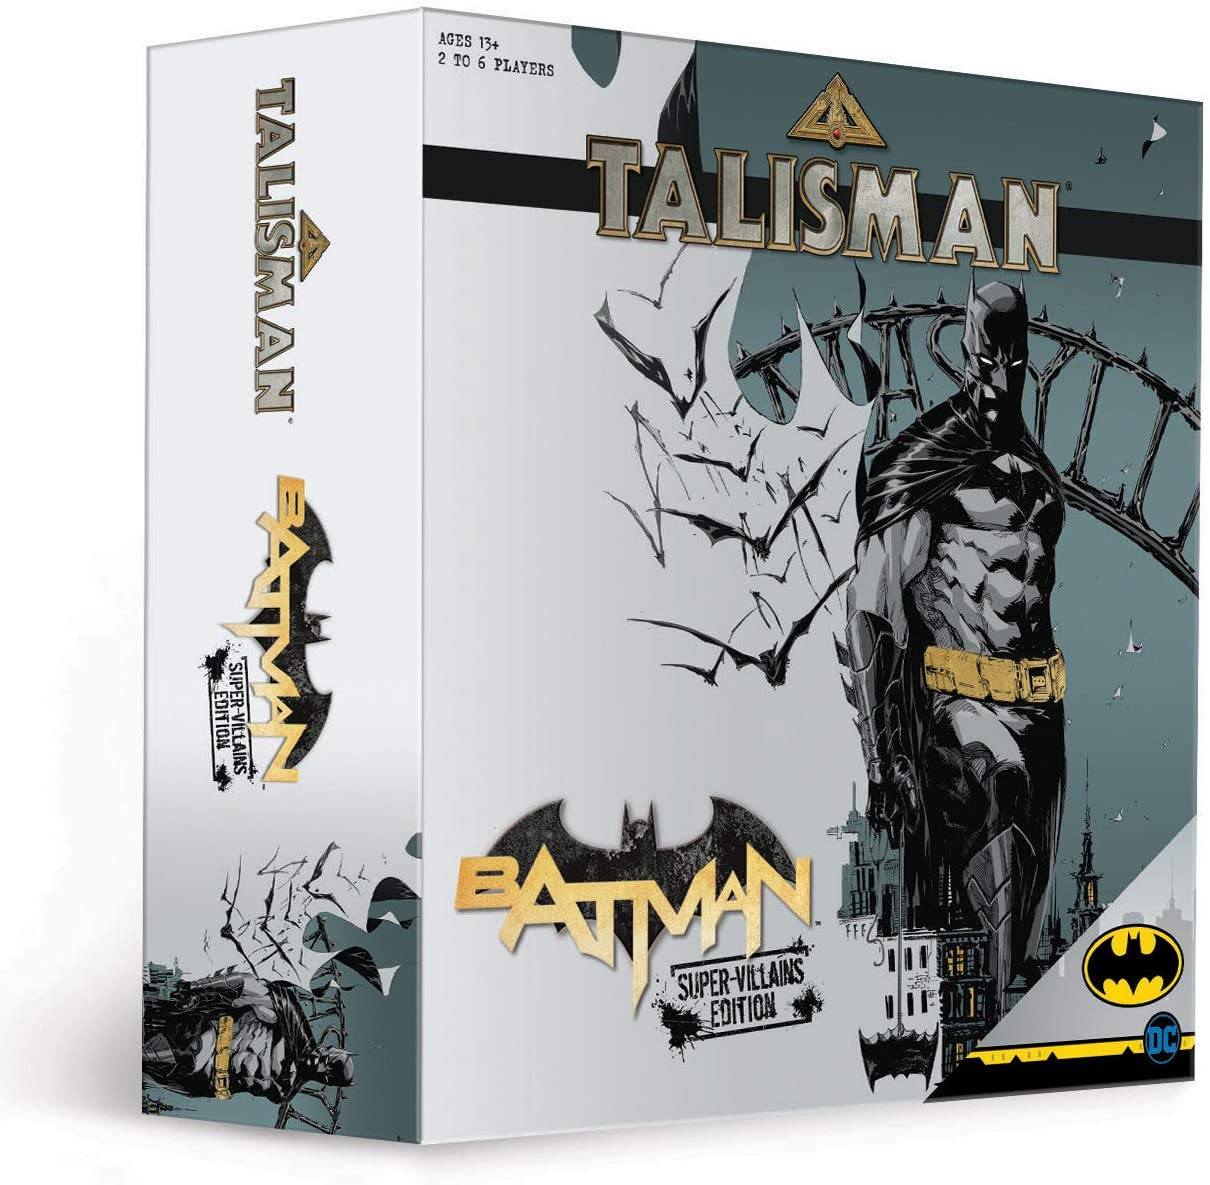 Talisman Batman Edition General Not specified 